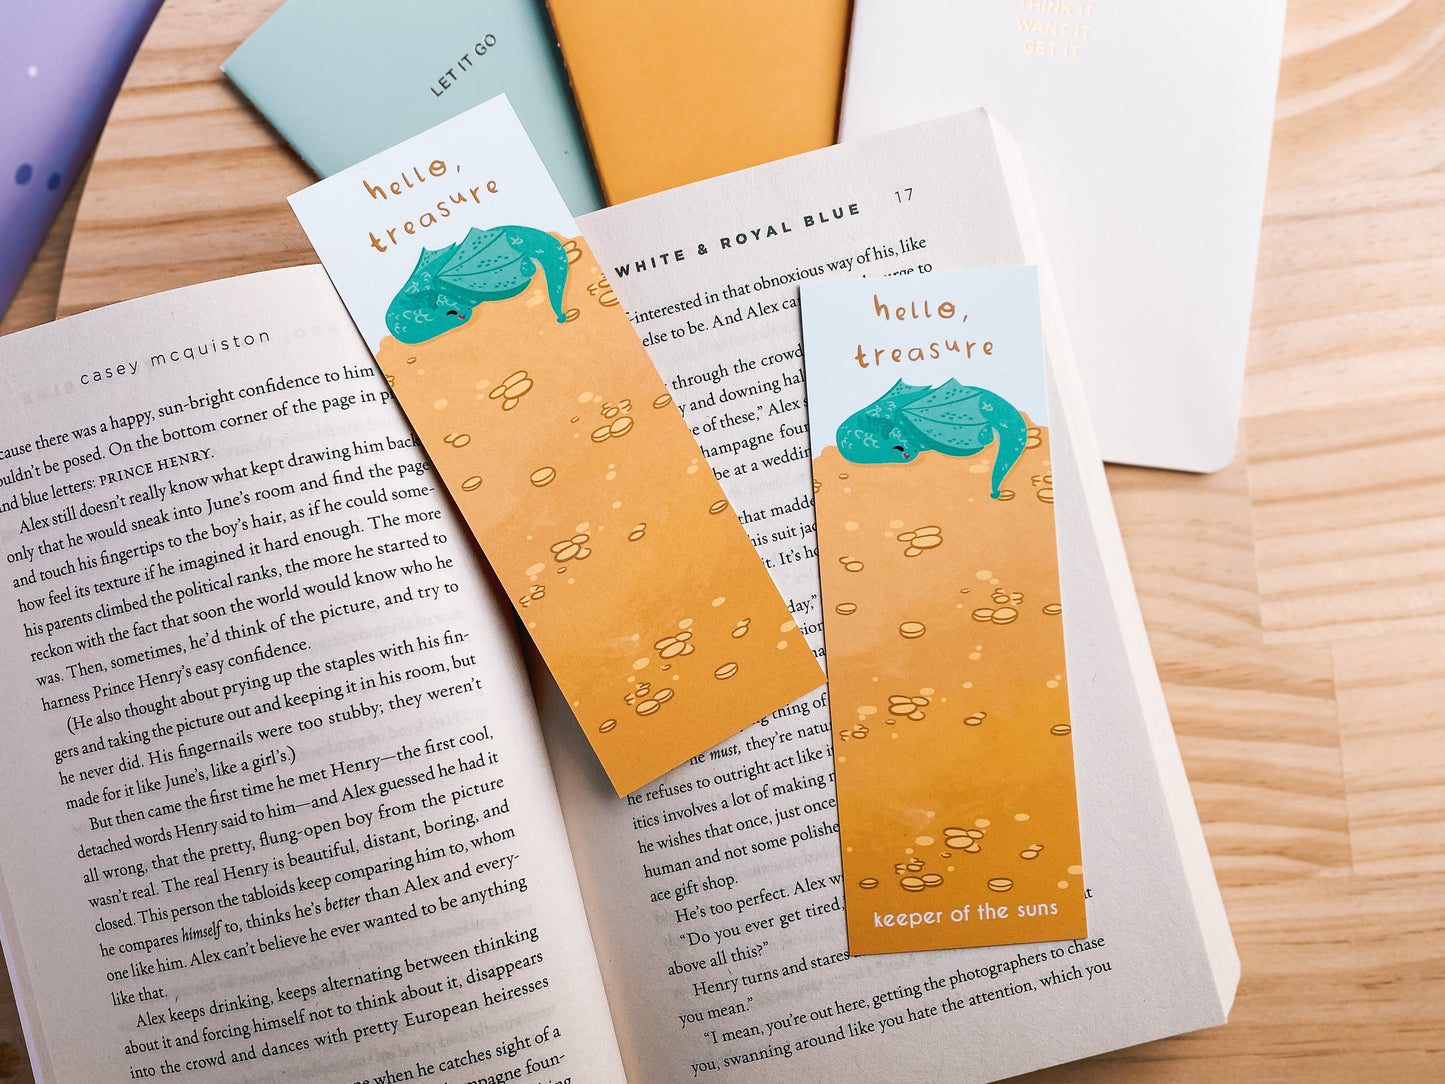 Money Dragon Bookmark - 400gsm Silky Smooth Velvet-Finish Bookmark